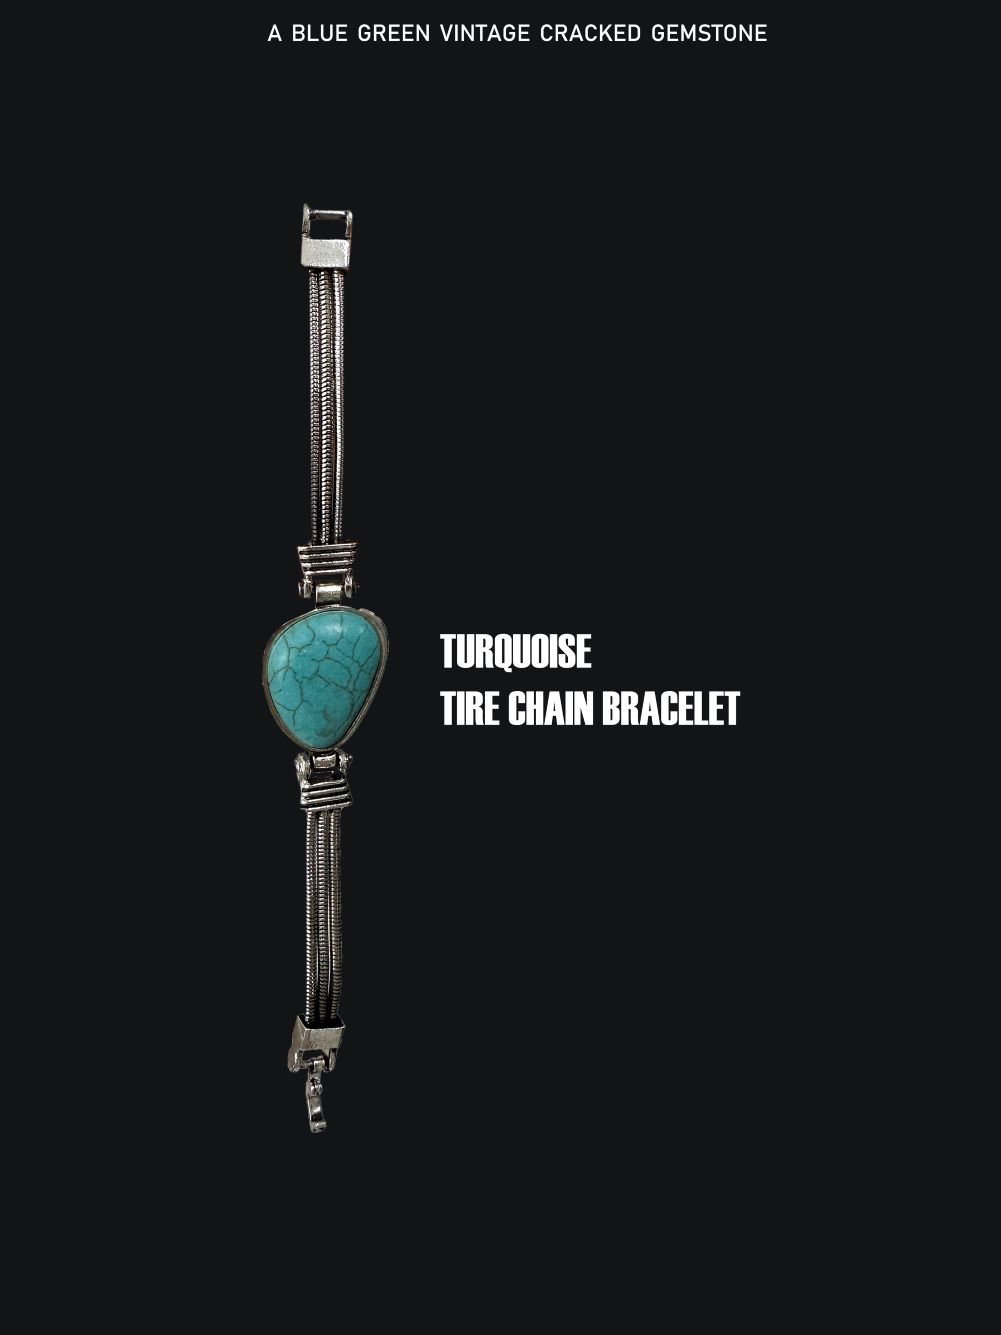 Turquoise tirechain bracelet